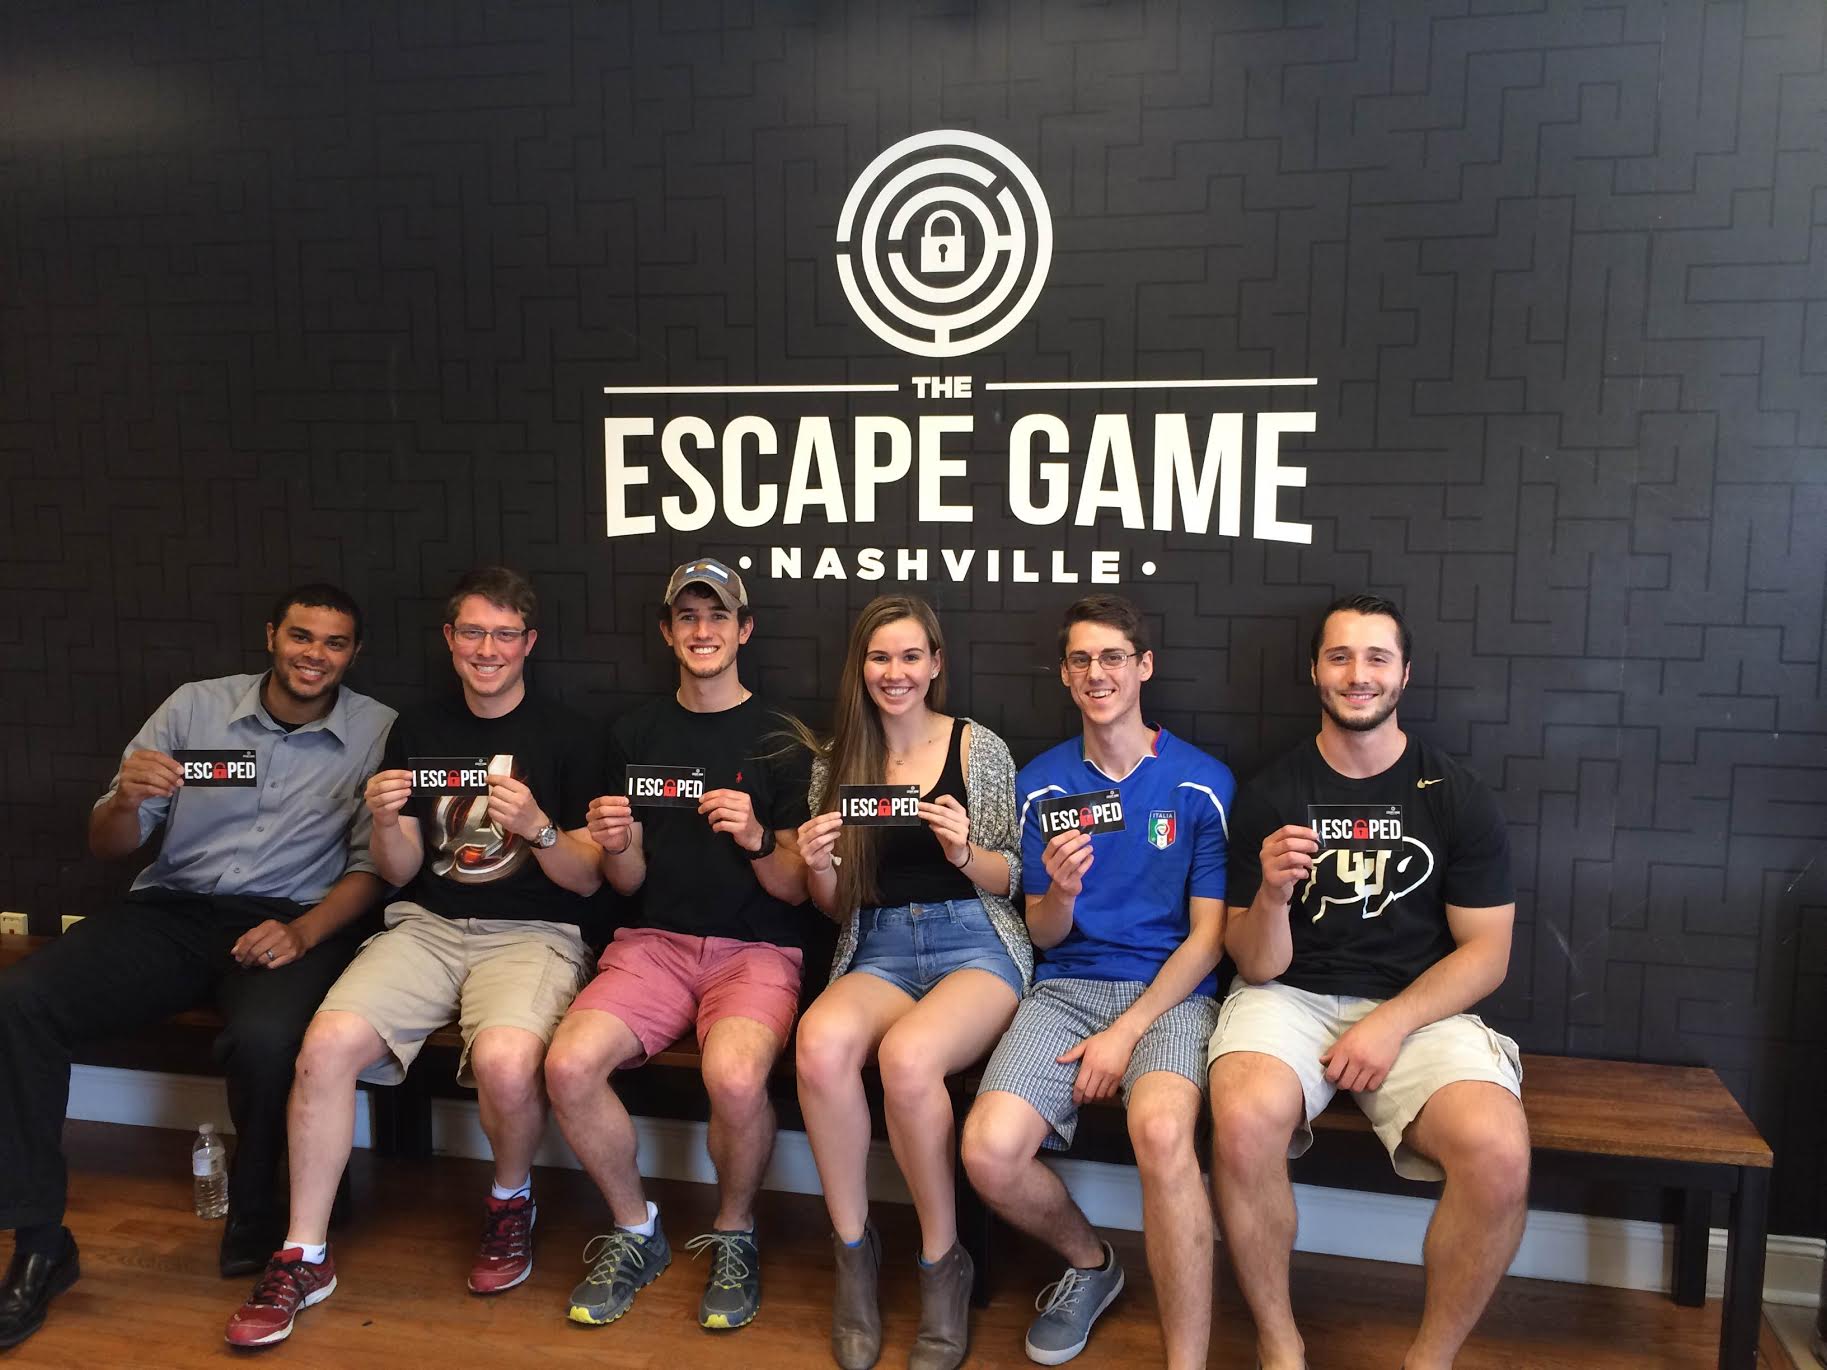 pic 9 - The Escape Game Victory June 2015